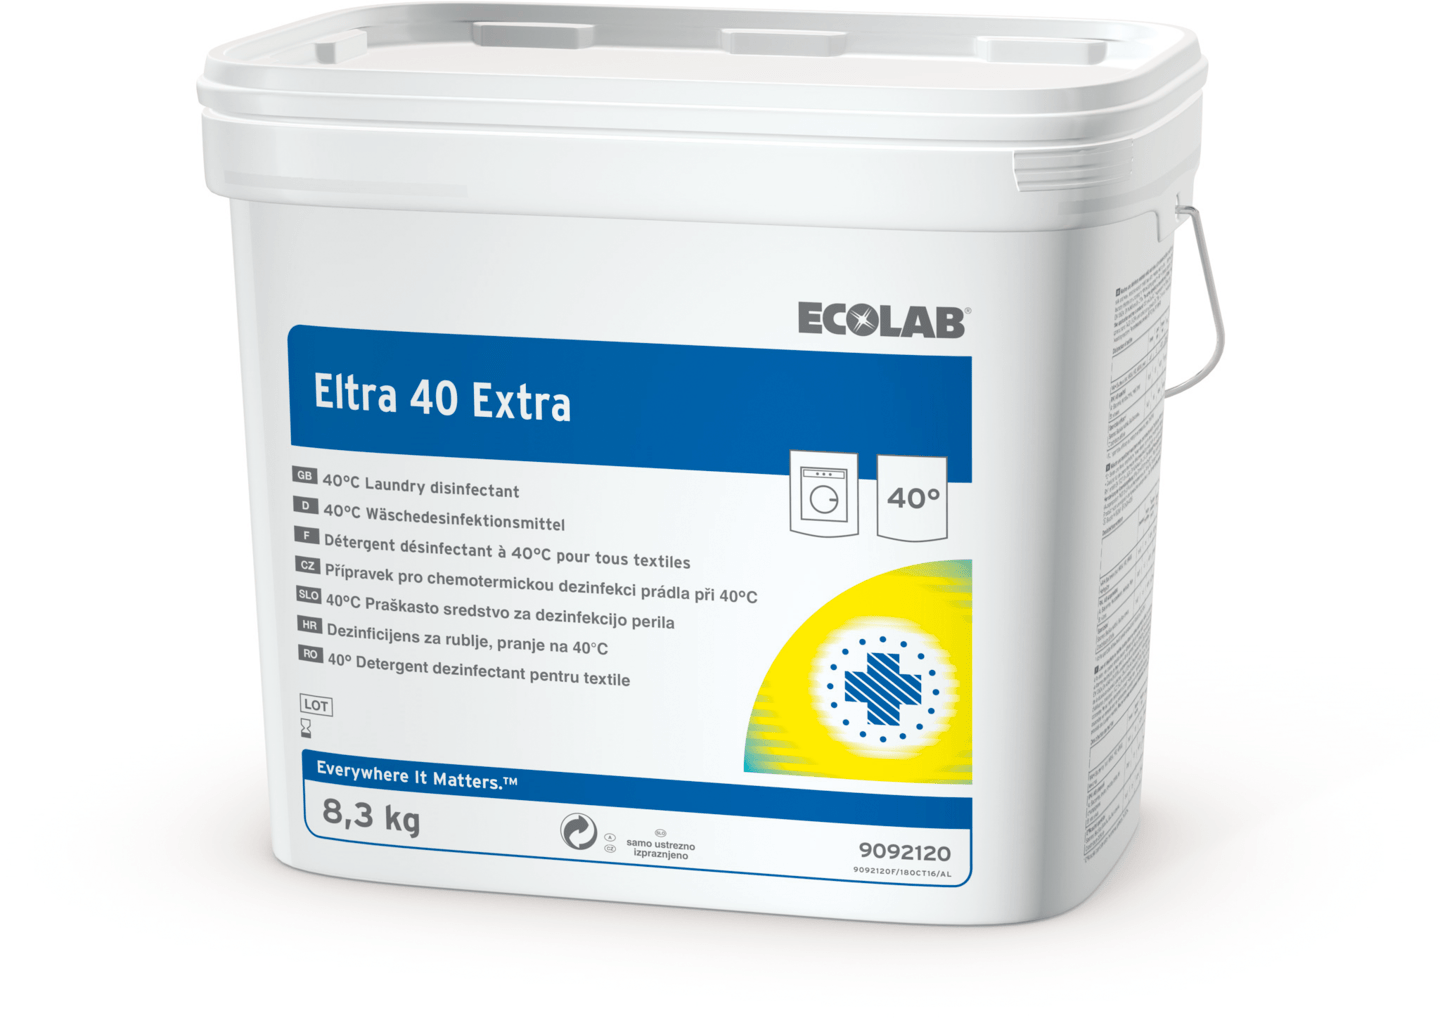 ECOLAB - Eltra 40 Extra Desinfektionswaschmittel